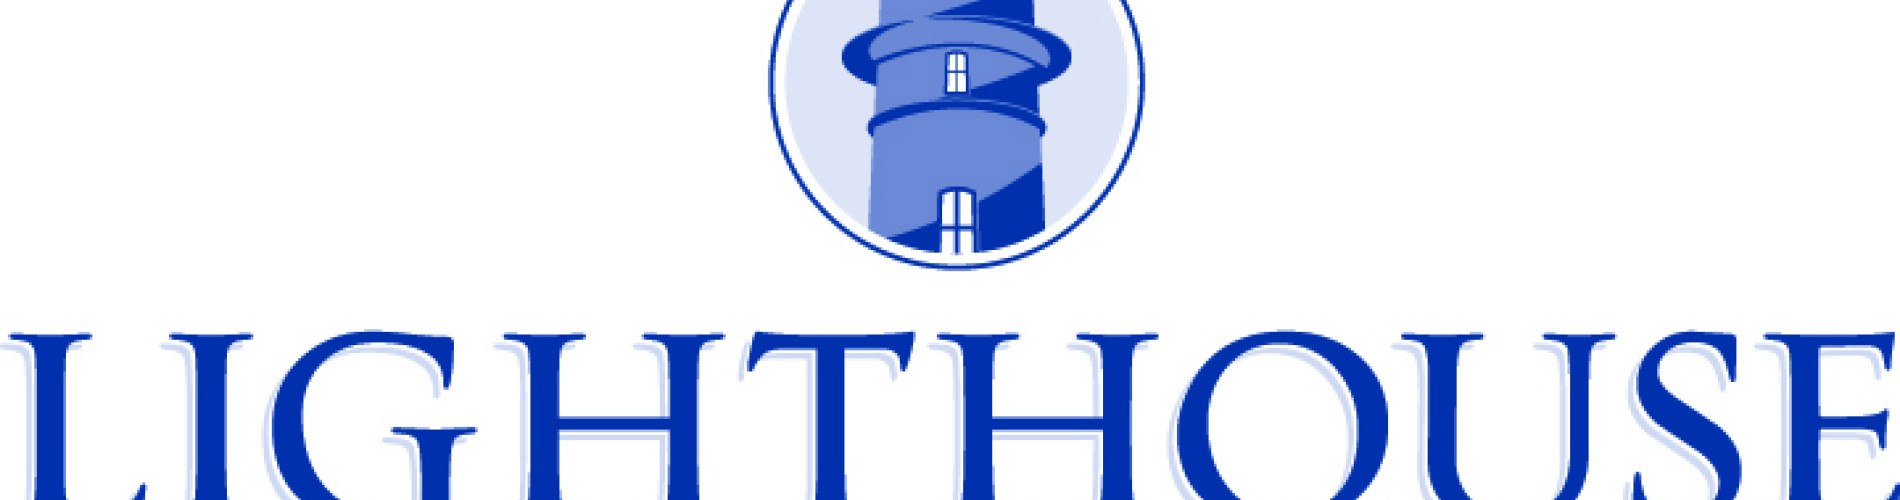 Lighthouse Counsel logo